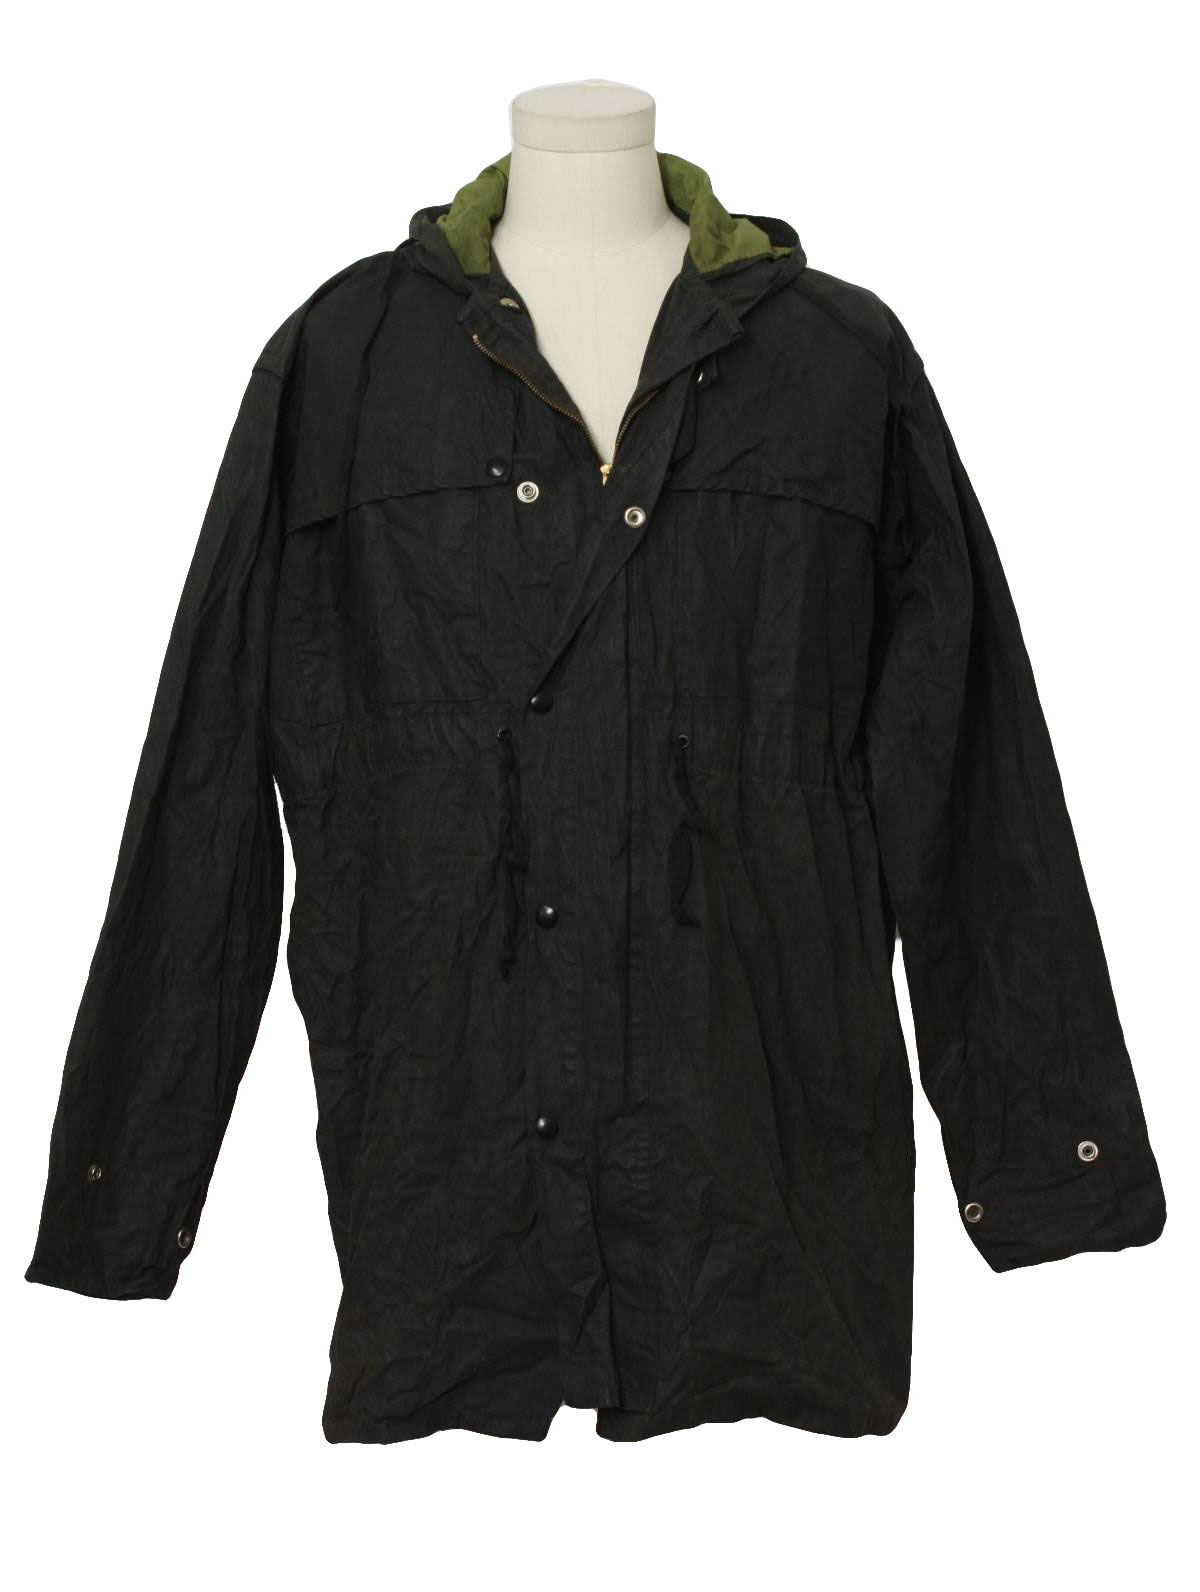 Eighties Vintage Jacket: 80s -A Skellerup Production- Mens army green ...